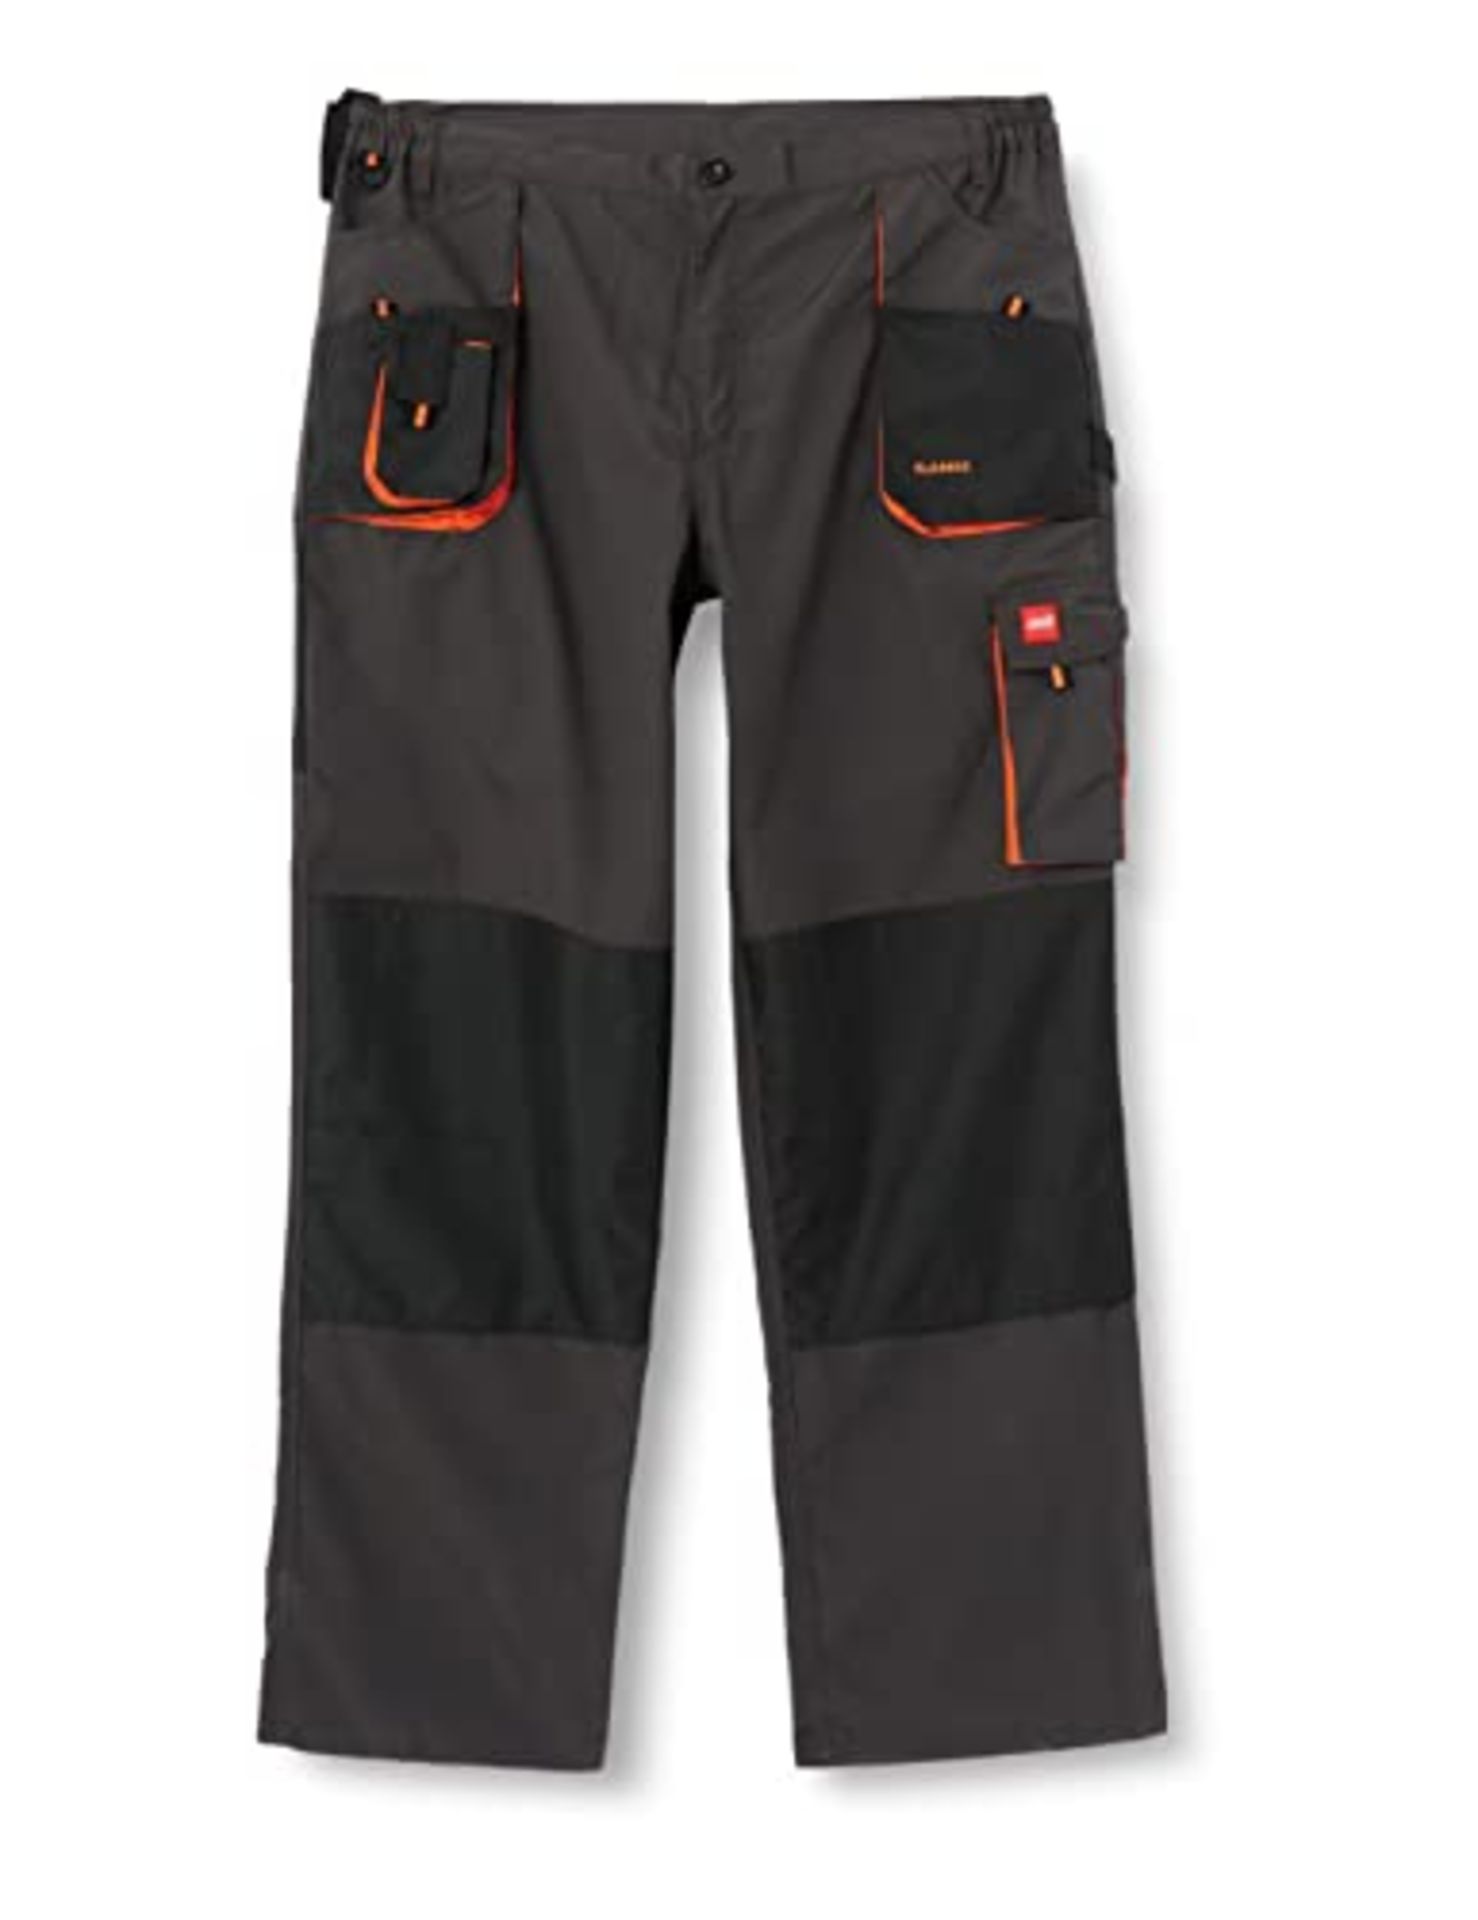 ART.MAS Multifunction work trousers, 270 g/m2, Classic Graphite/orange 60